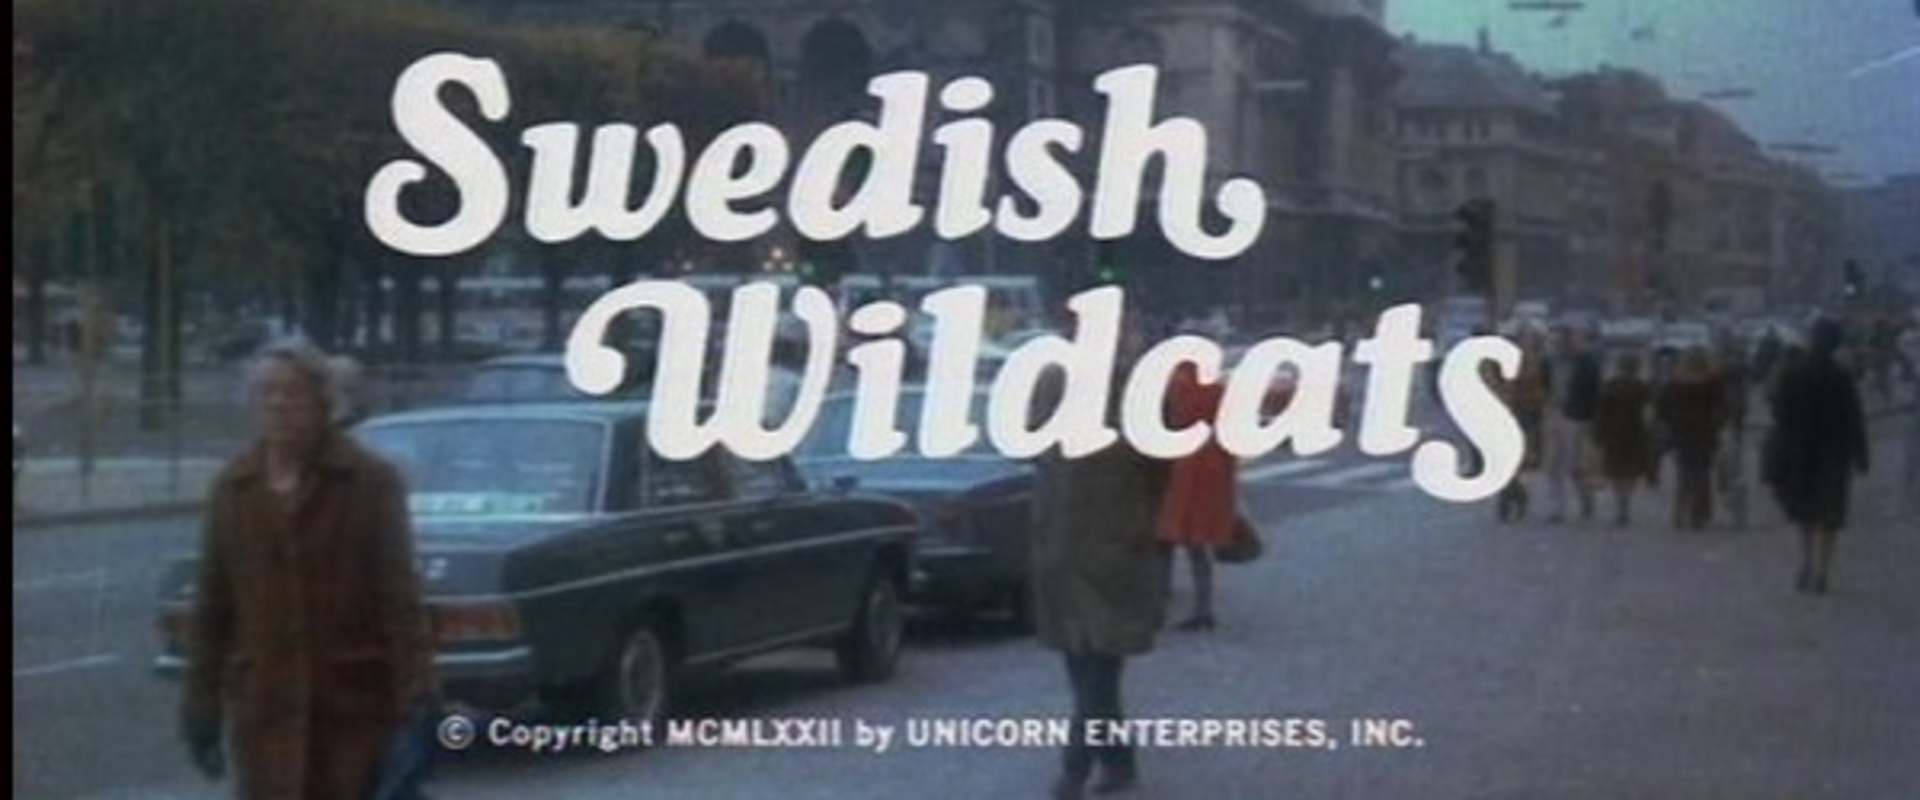 Swedish Wildcats background 2